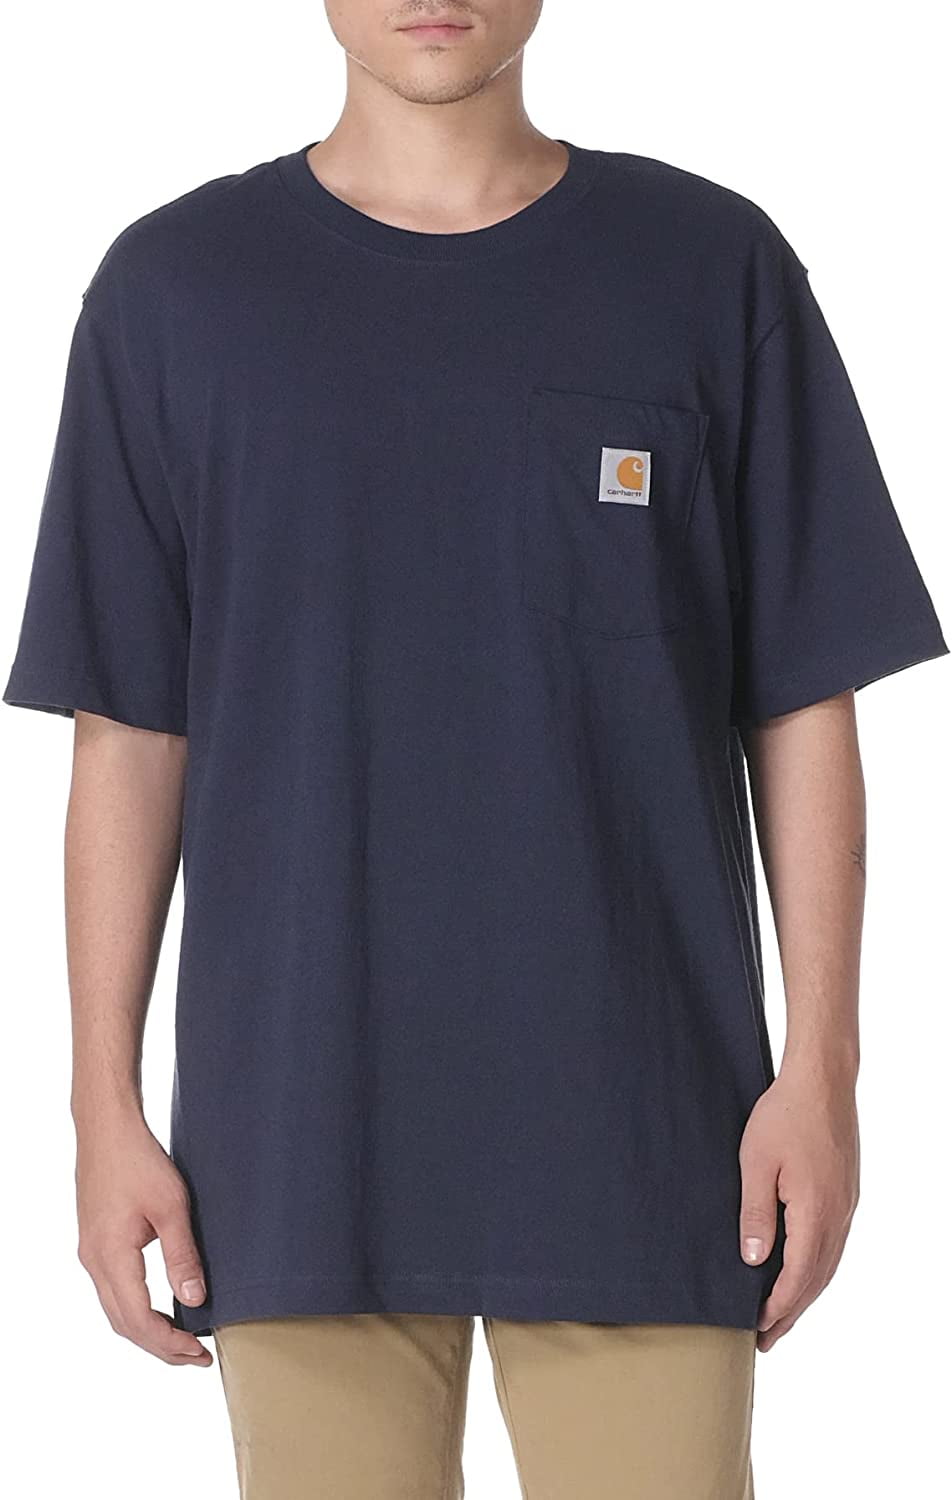 Car-hartt_ Men's Loose Fit Heavyweight Short-Sleeve Pocket T-Shirt ...